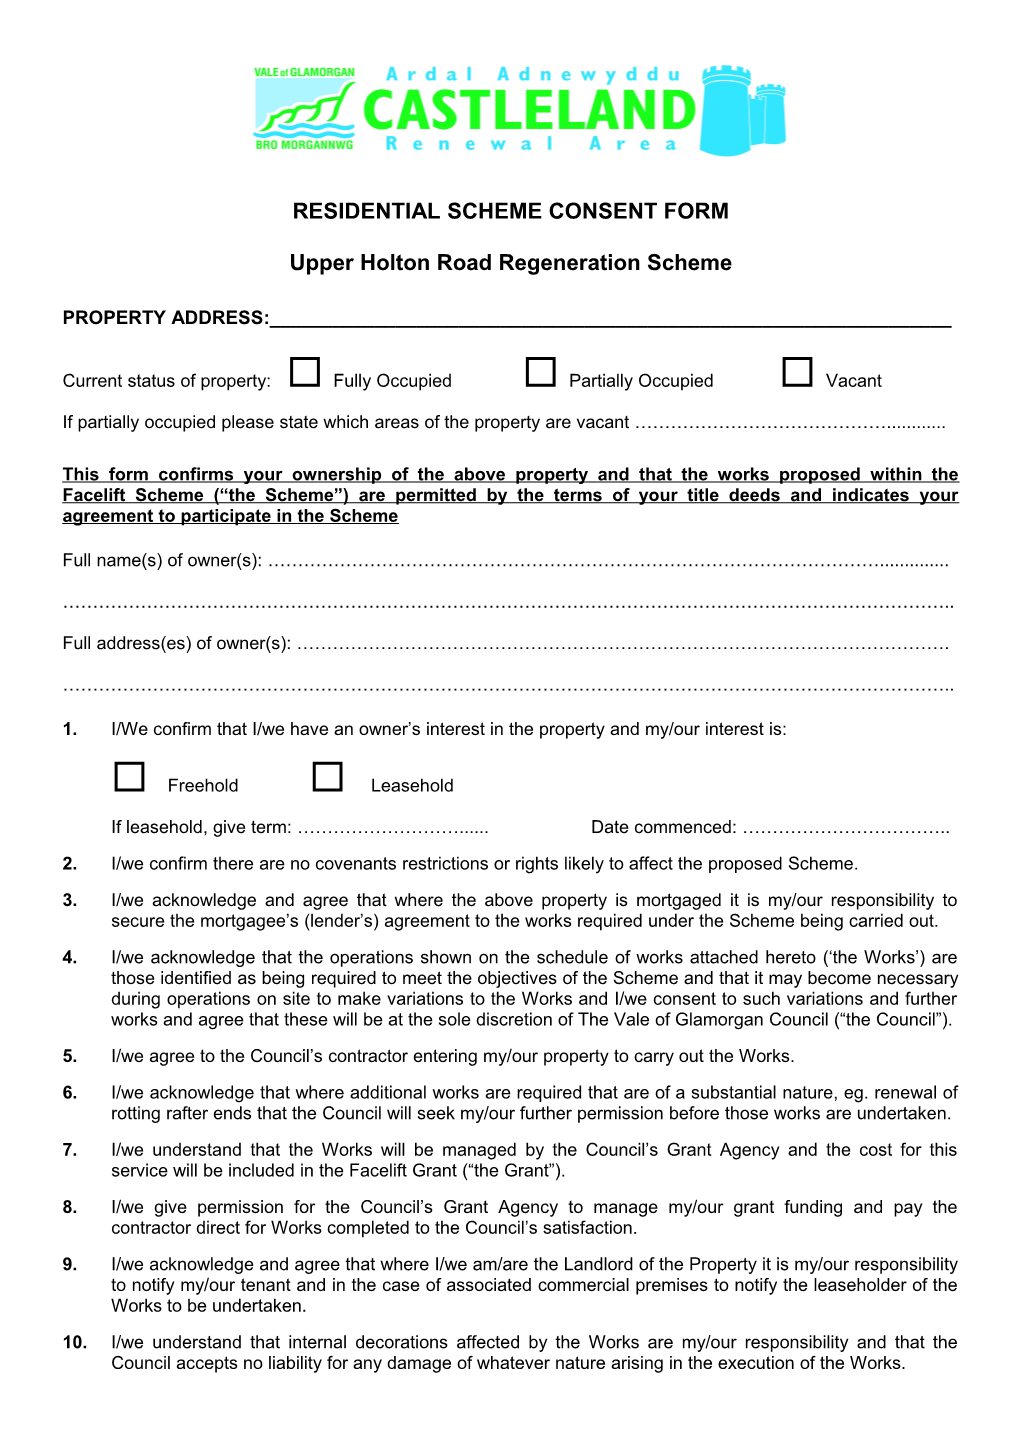 Residential-Scheme-Consent-Form